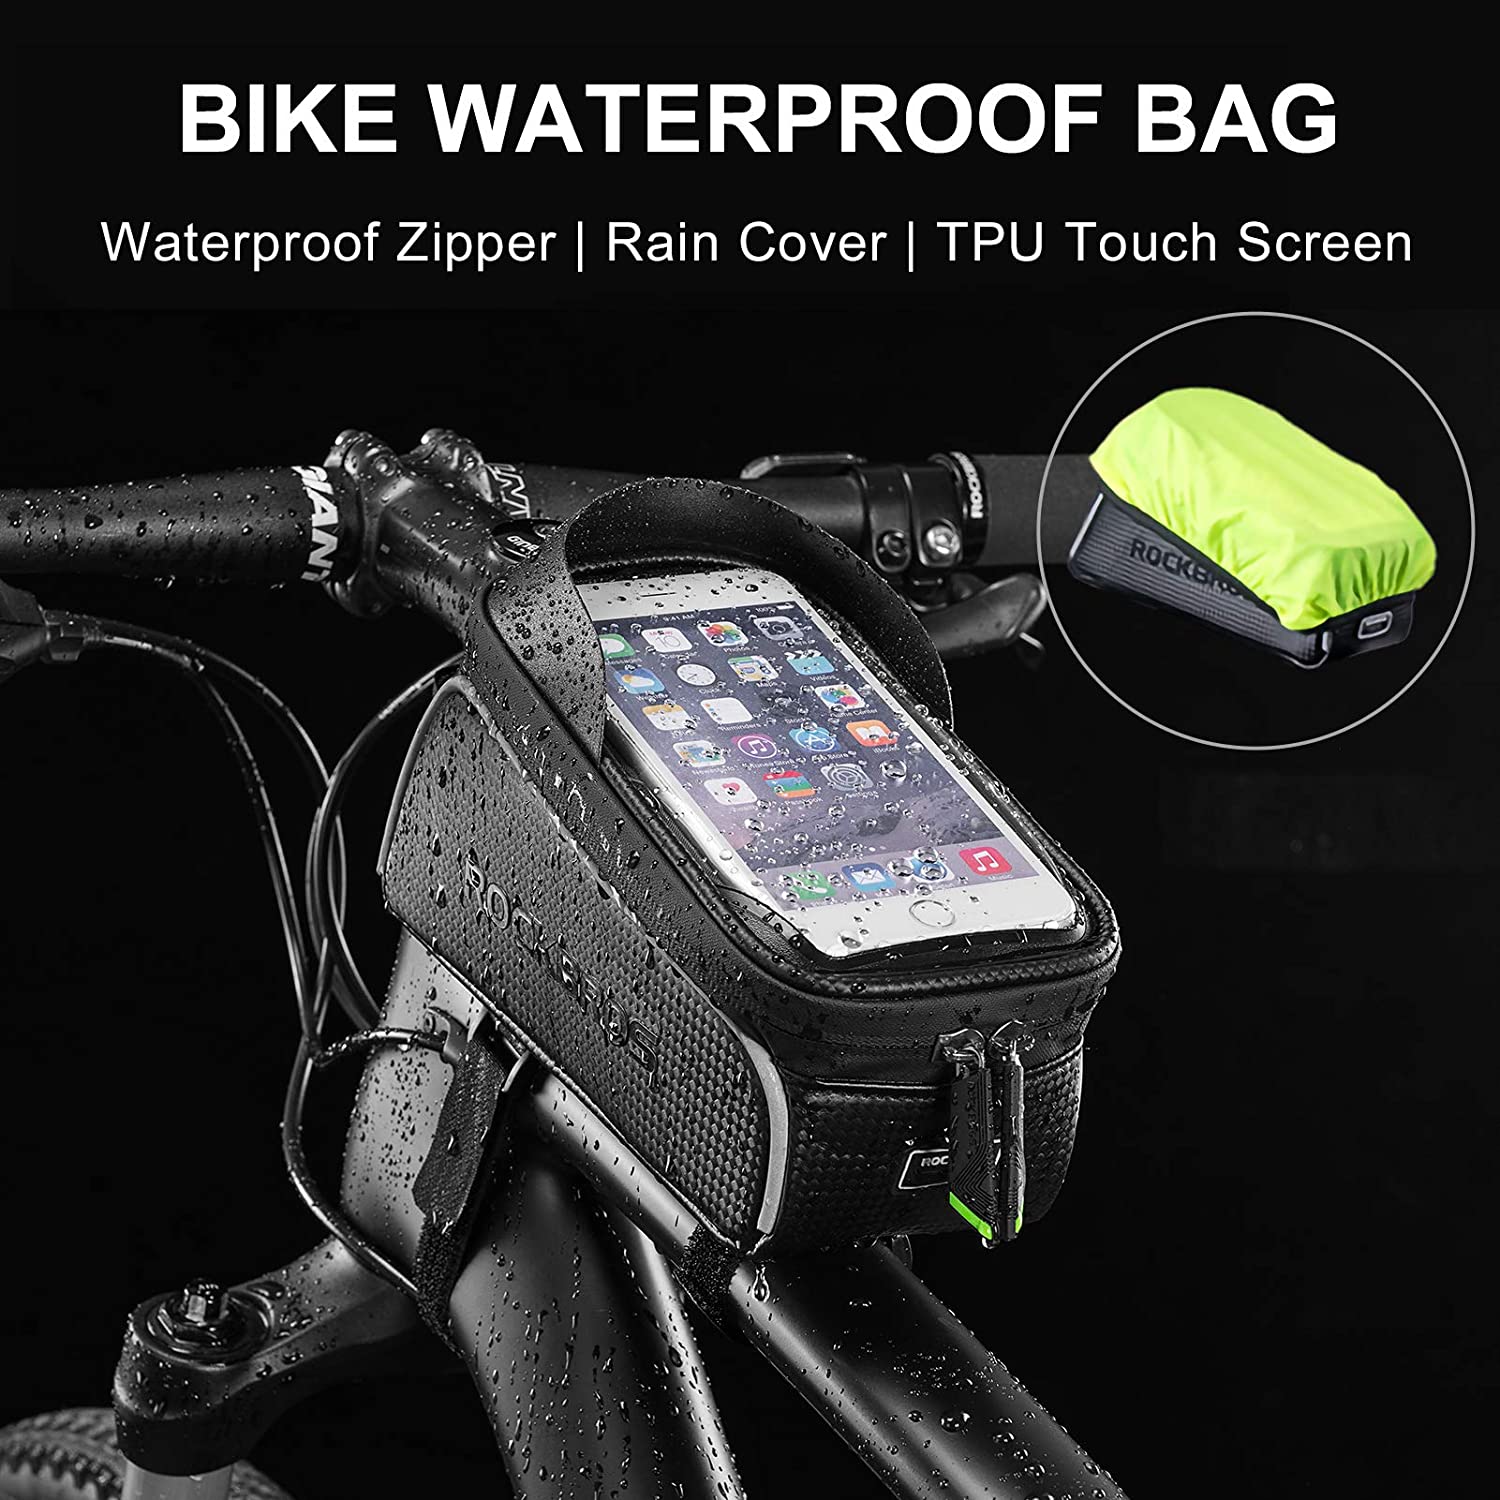 ROCKBROS Top Tube Bike Bag With Phone Case Holder